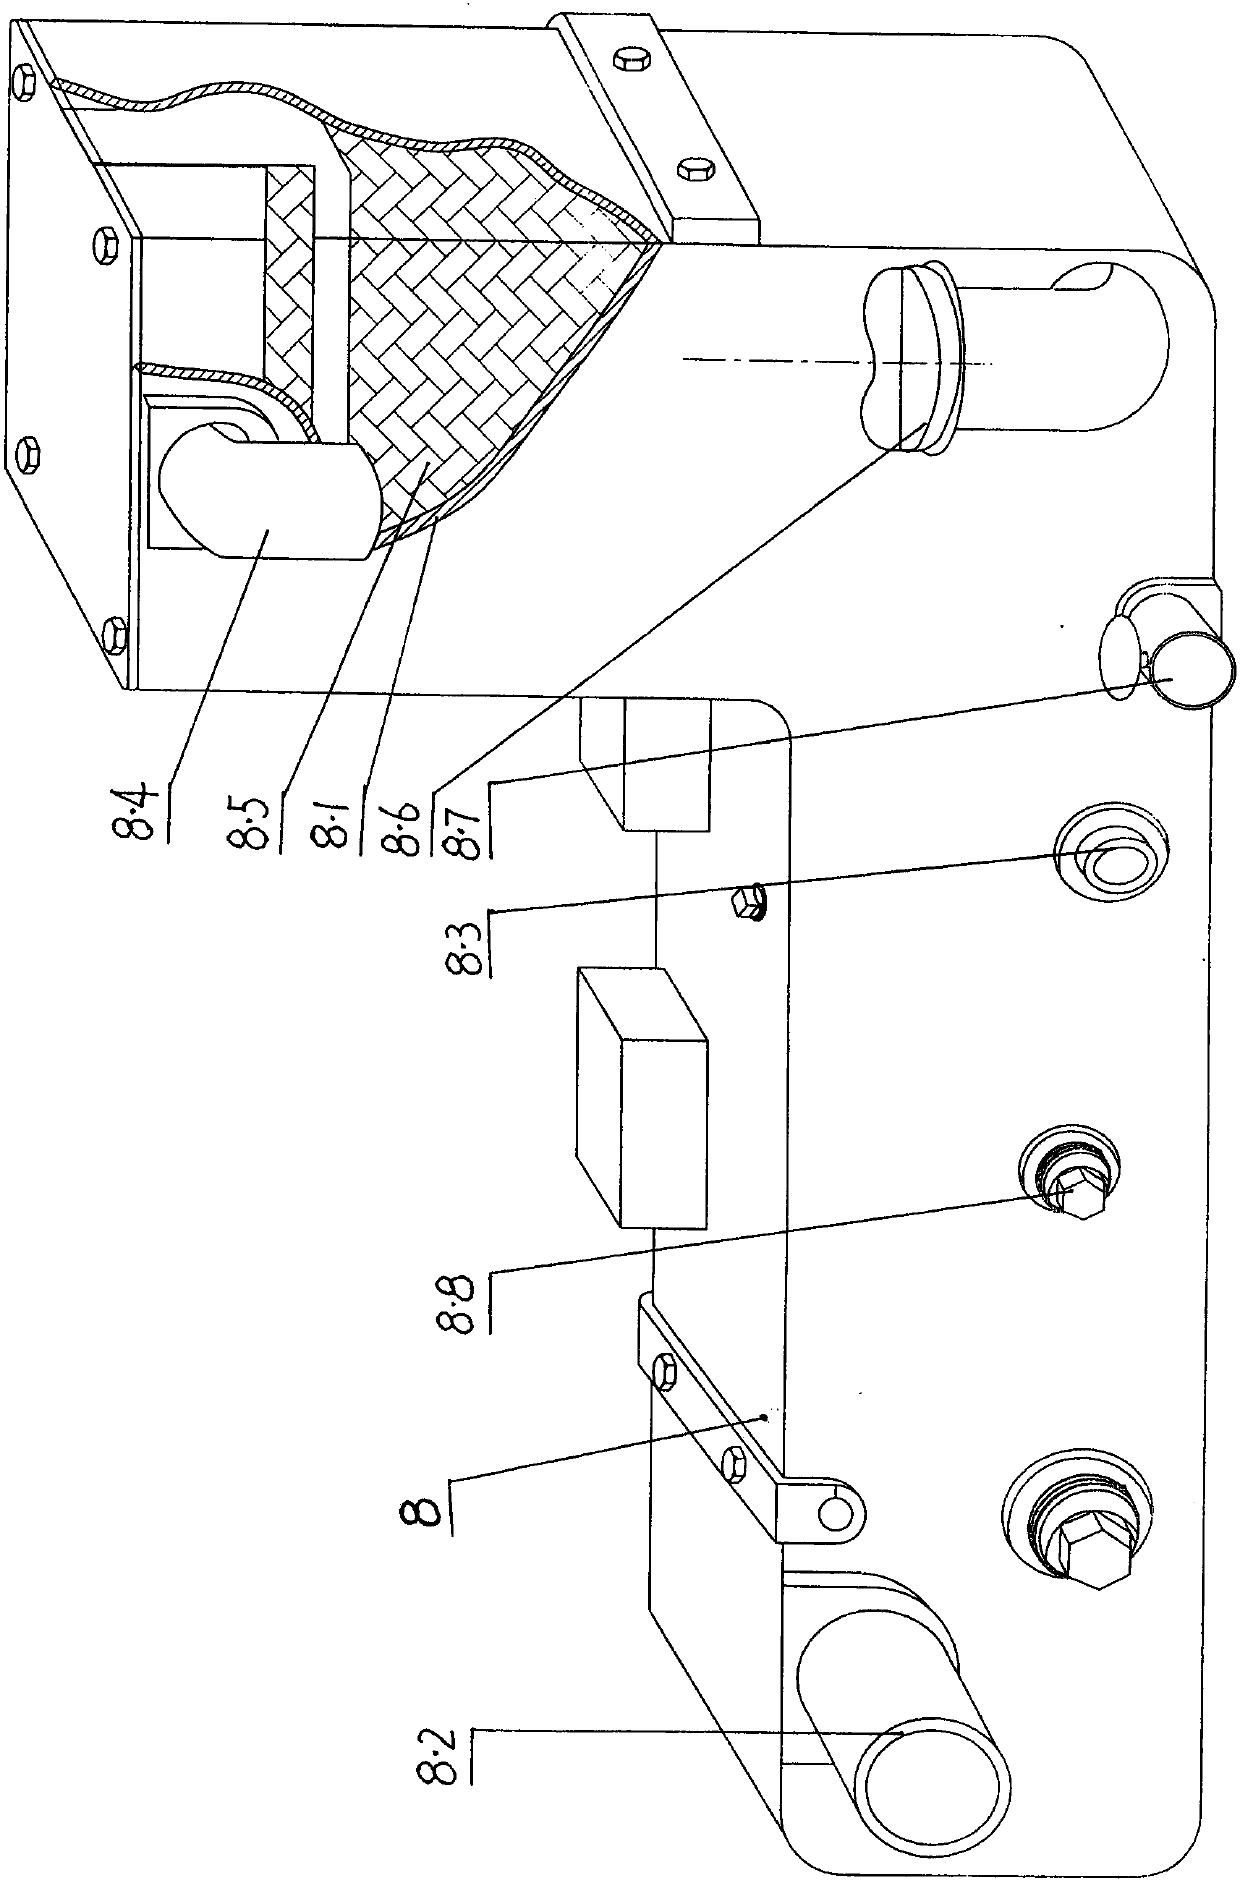 Vacuum self-priming pump with suction aid mechanism